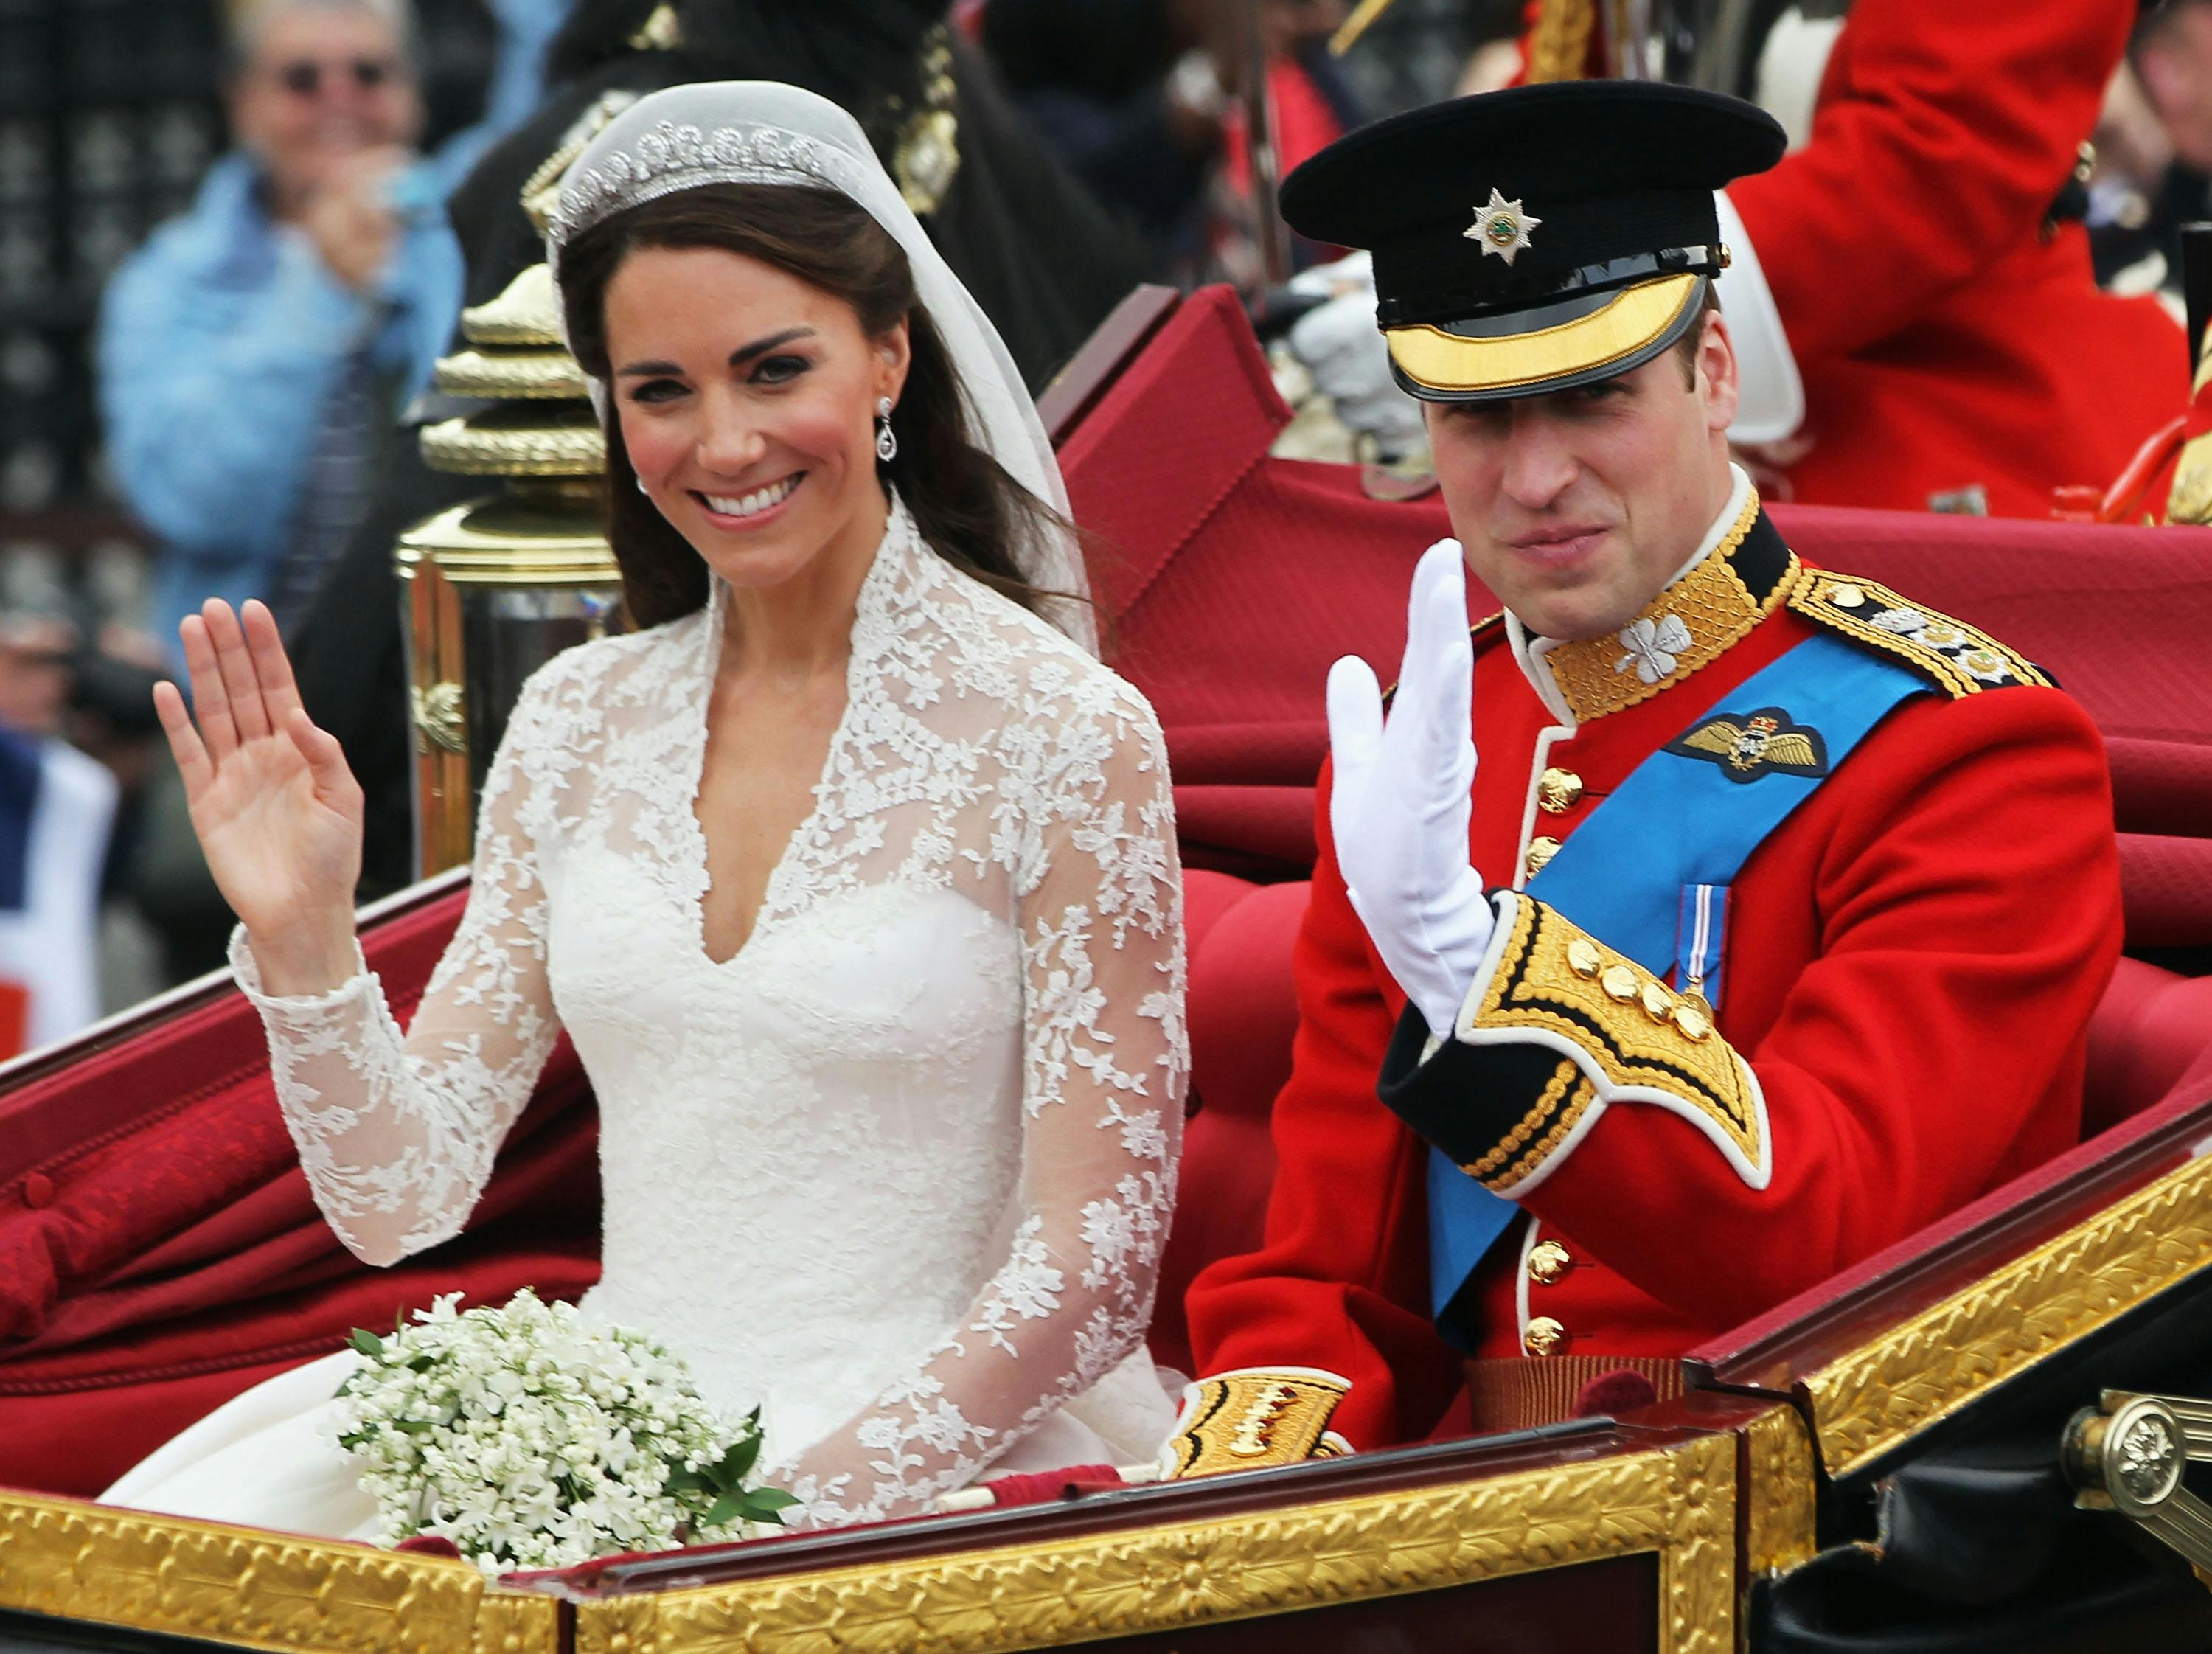 Photos Of Royal Wedding Cakes Through The Years | HuffPost Life